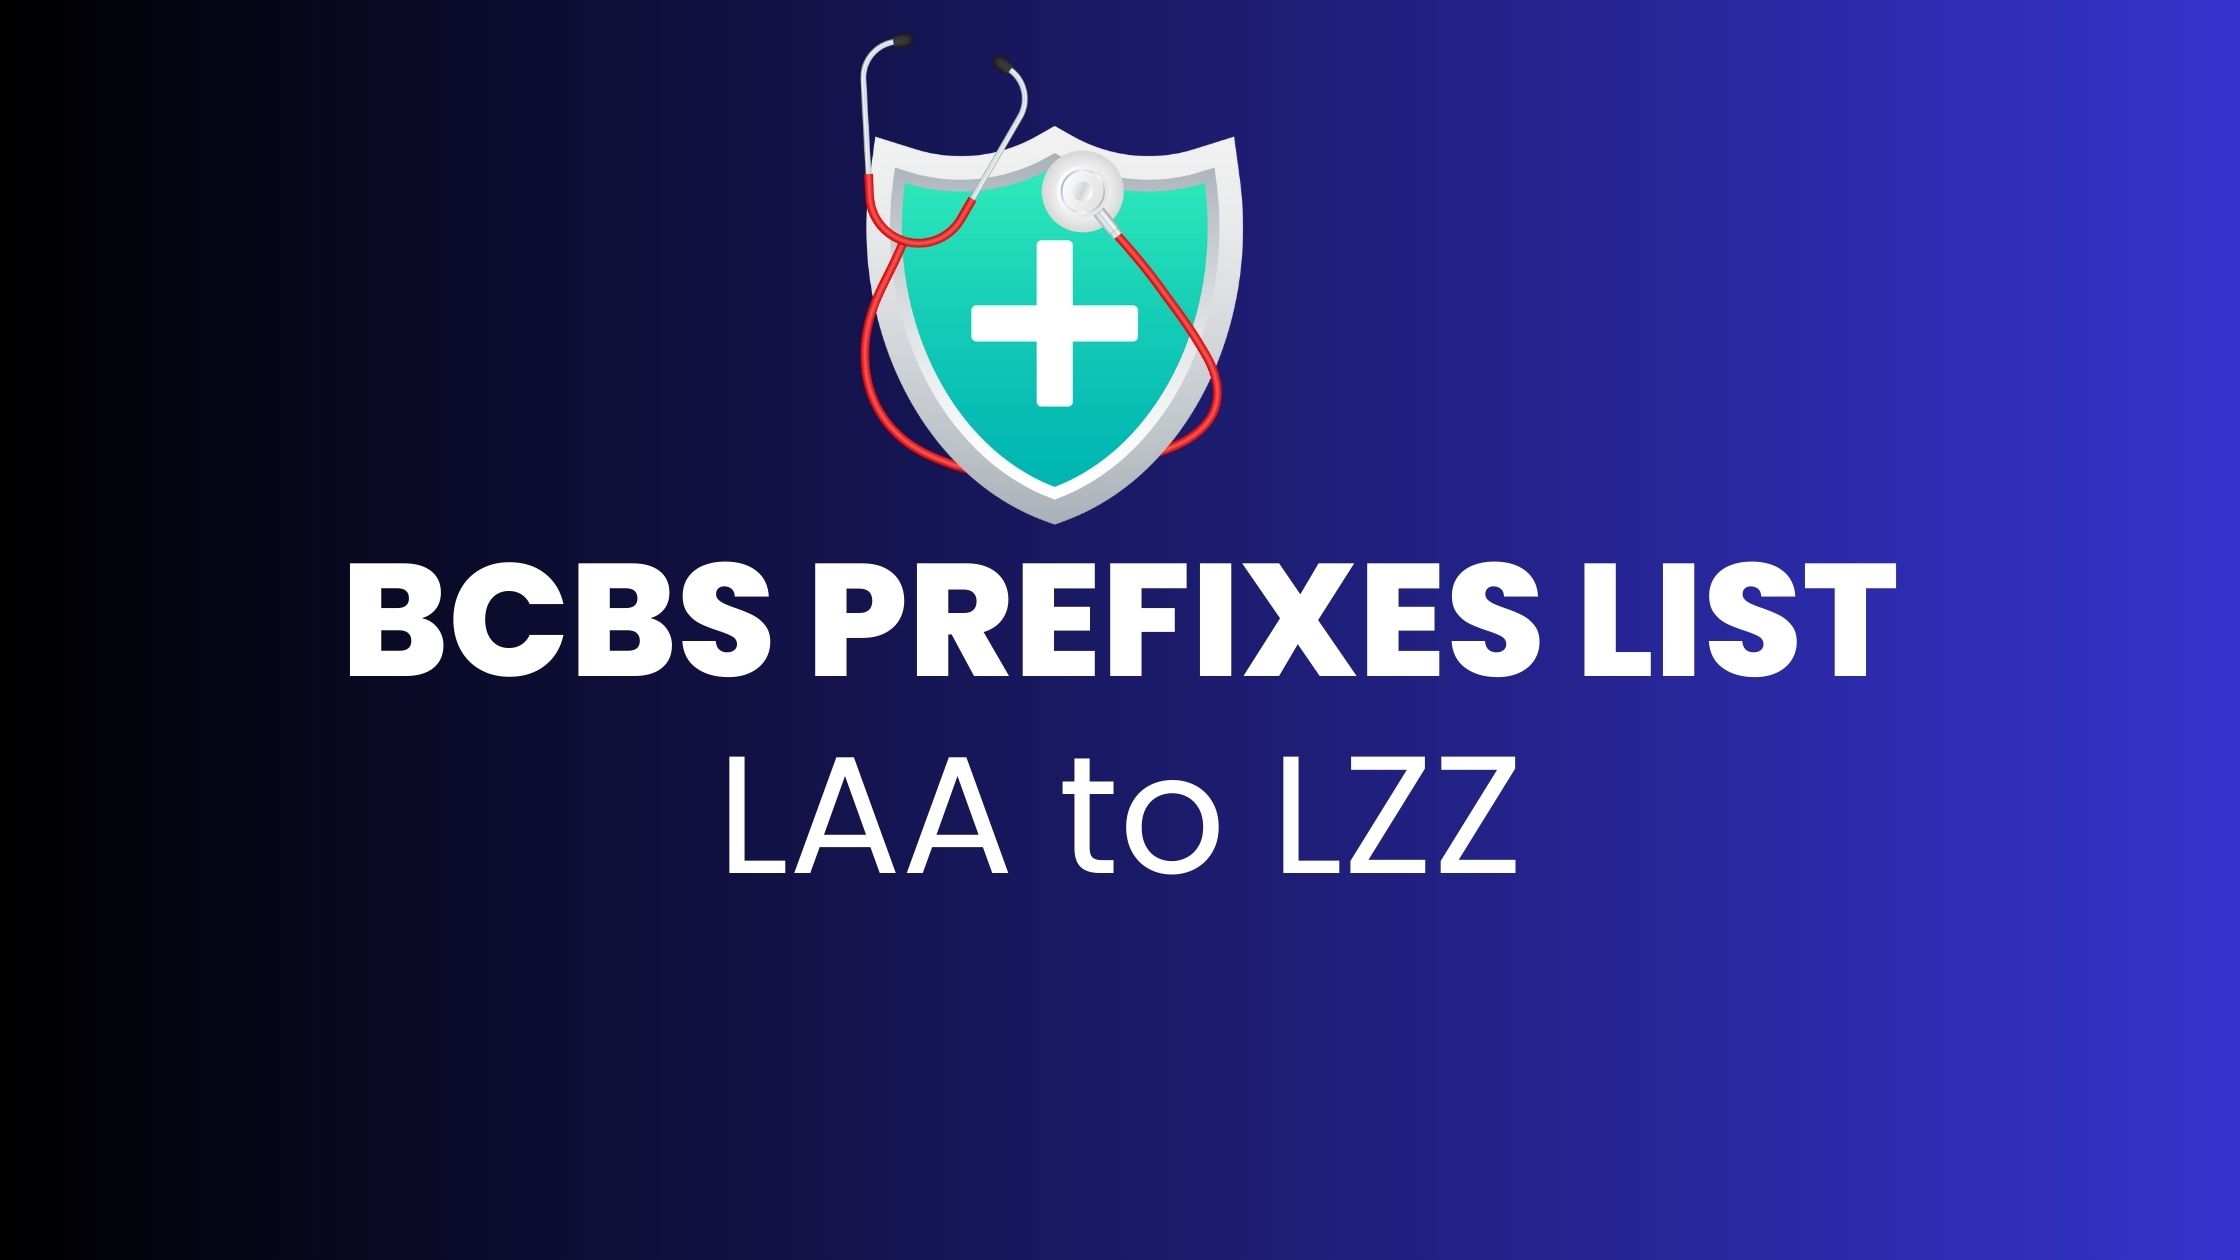 BCBS Prefix LAA to LZZ